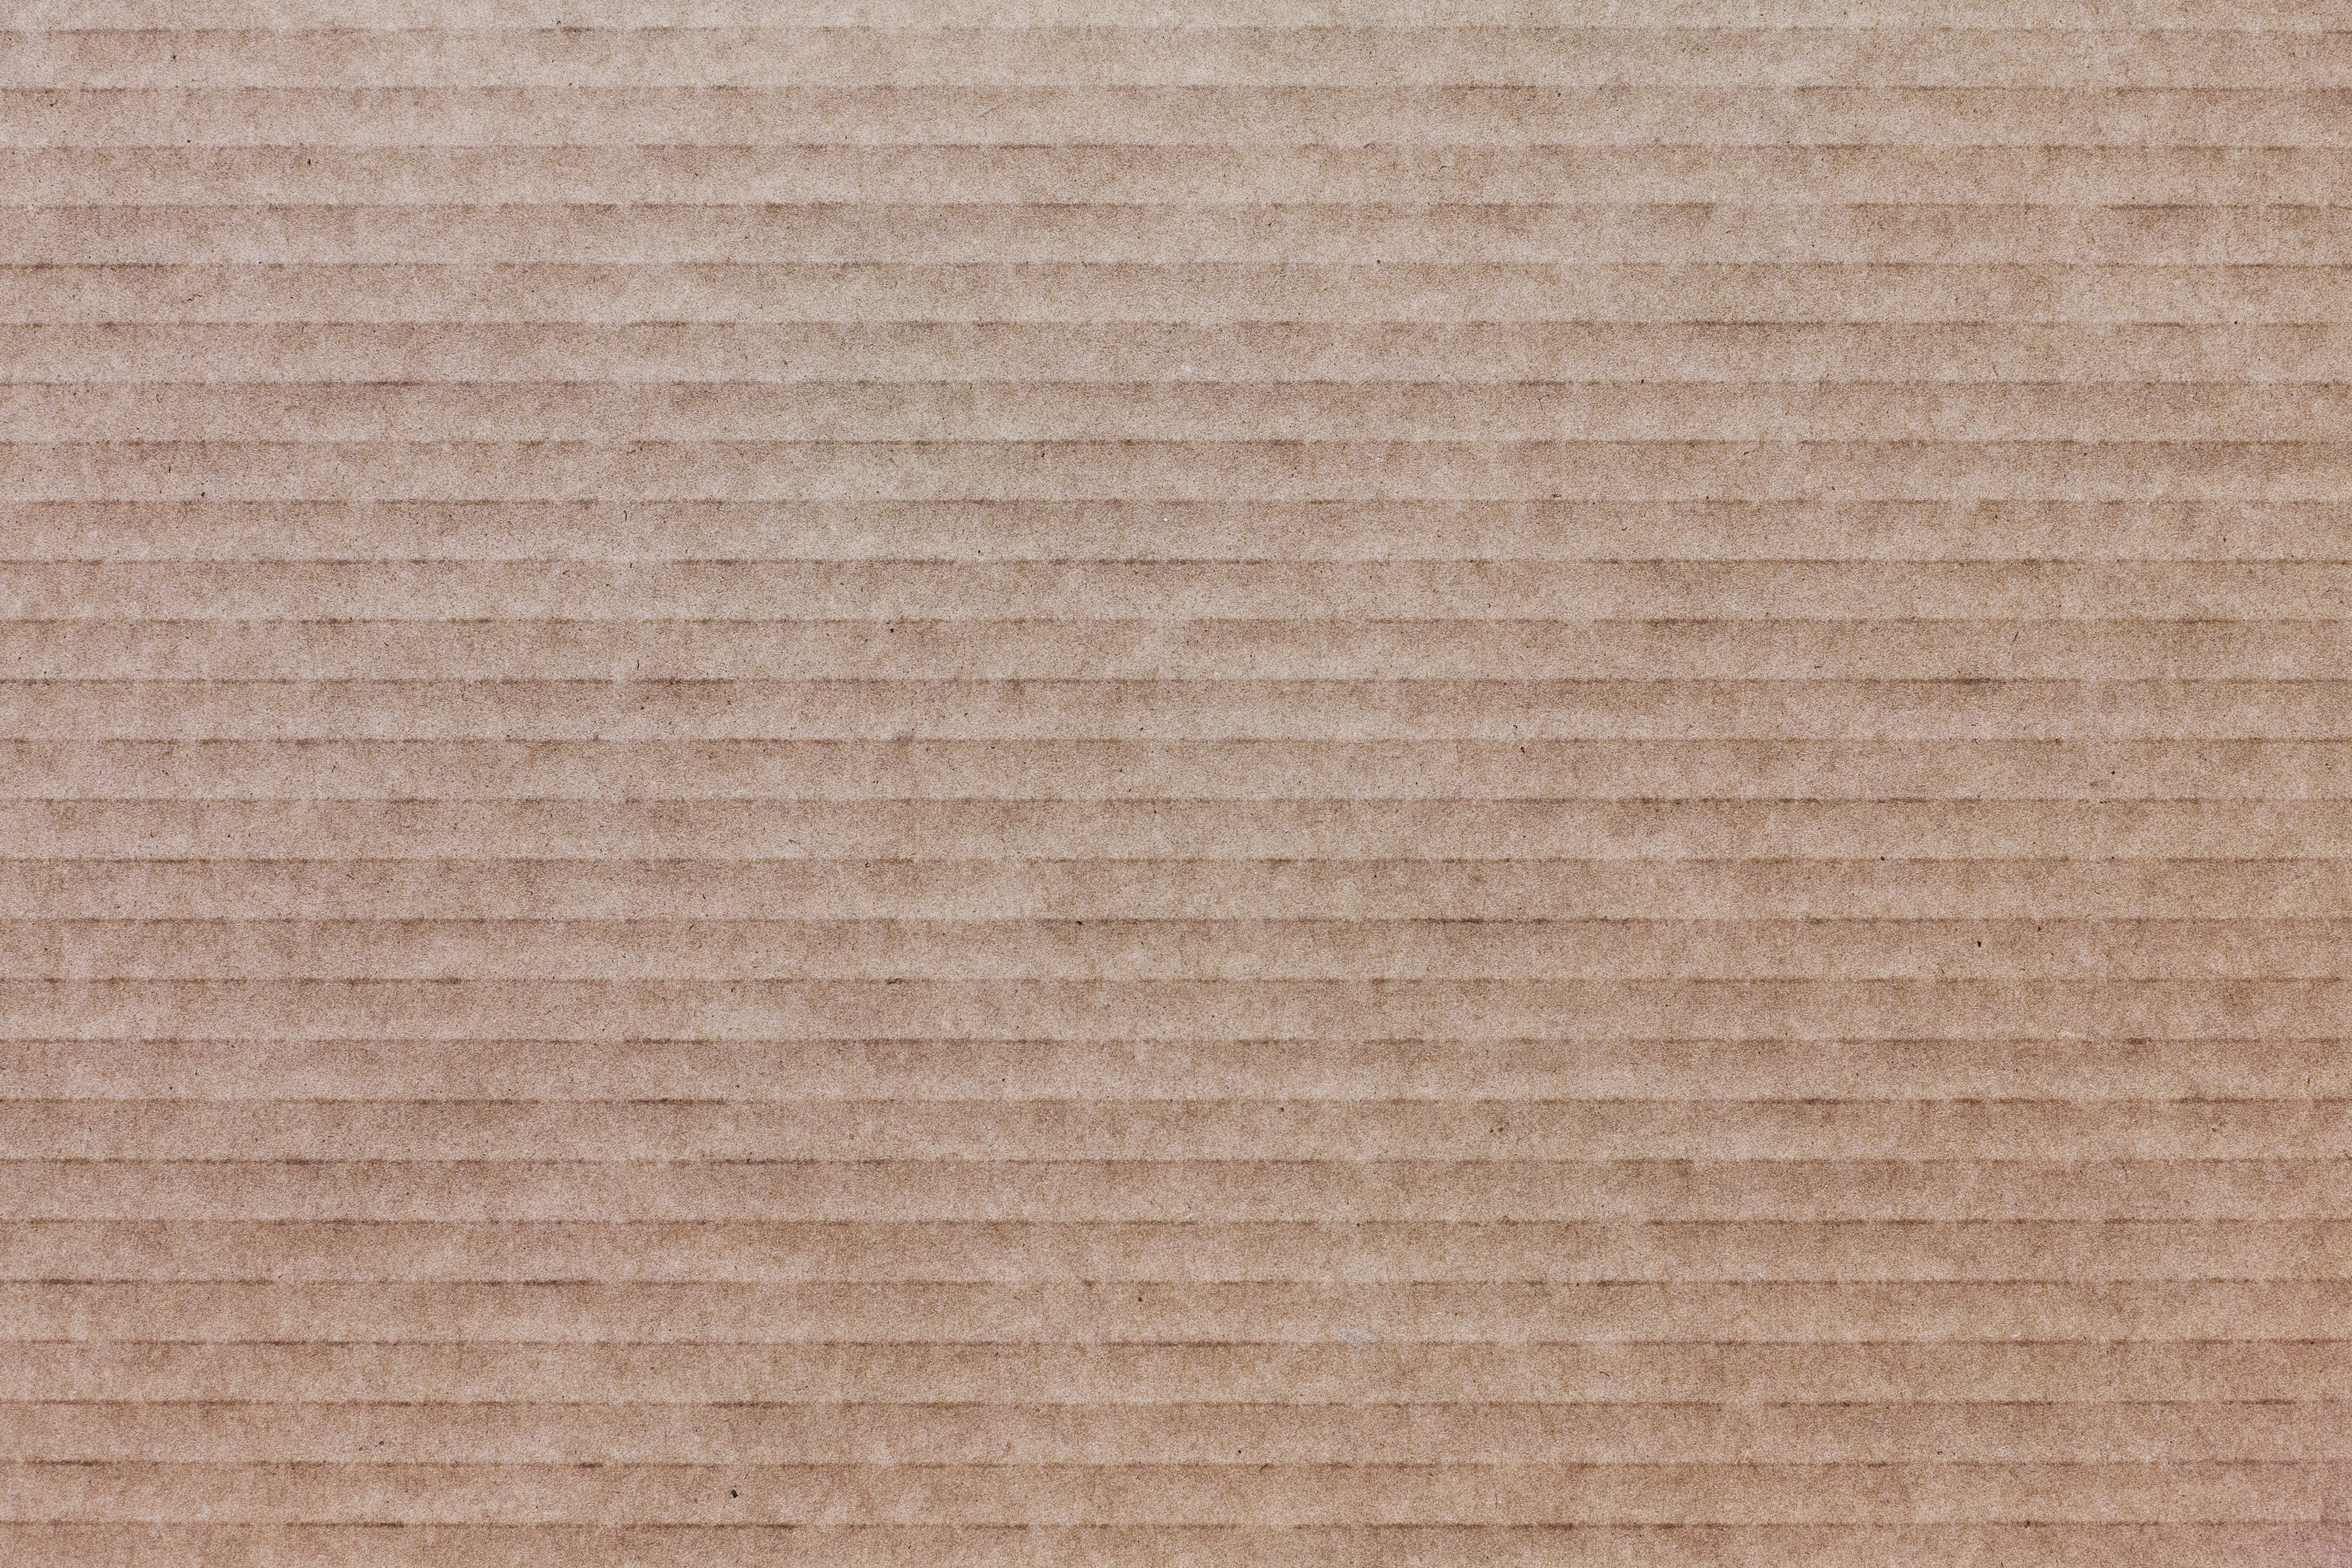 Free photo: Corrugated cardboard texture - Business, Cardboard